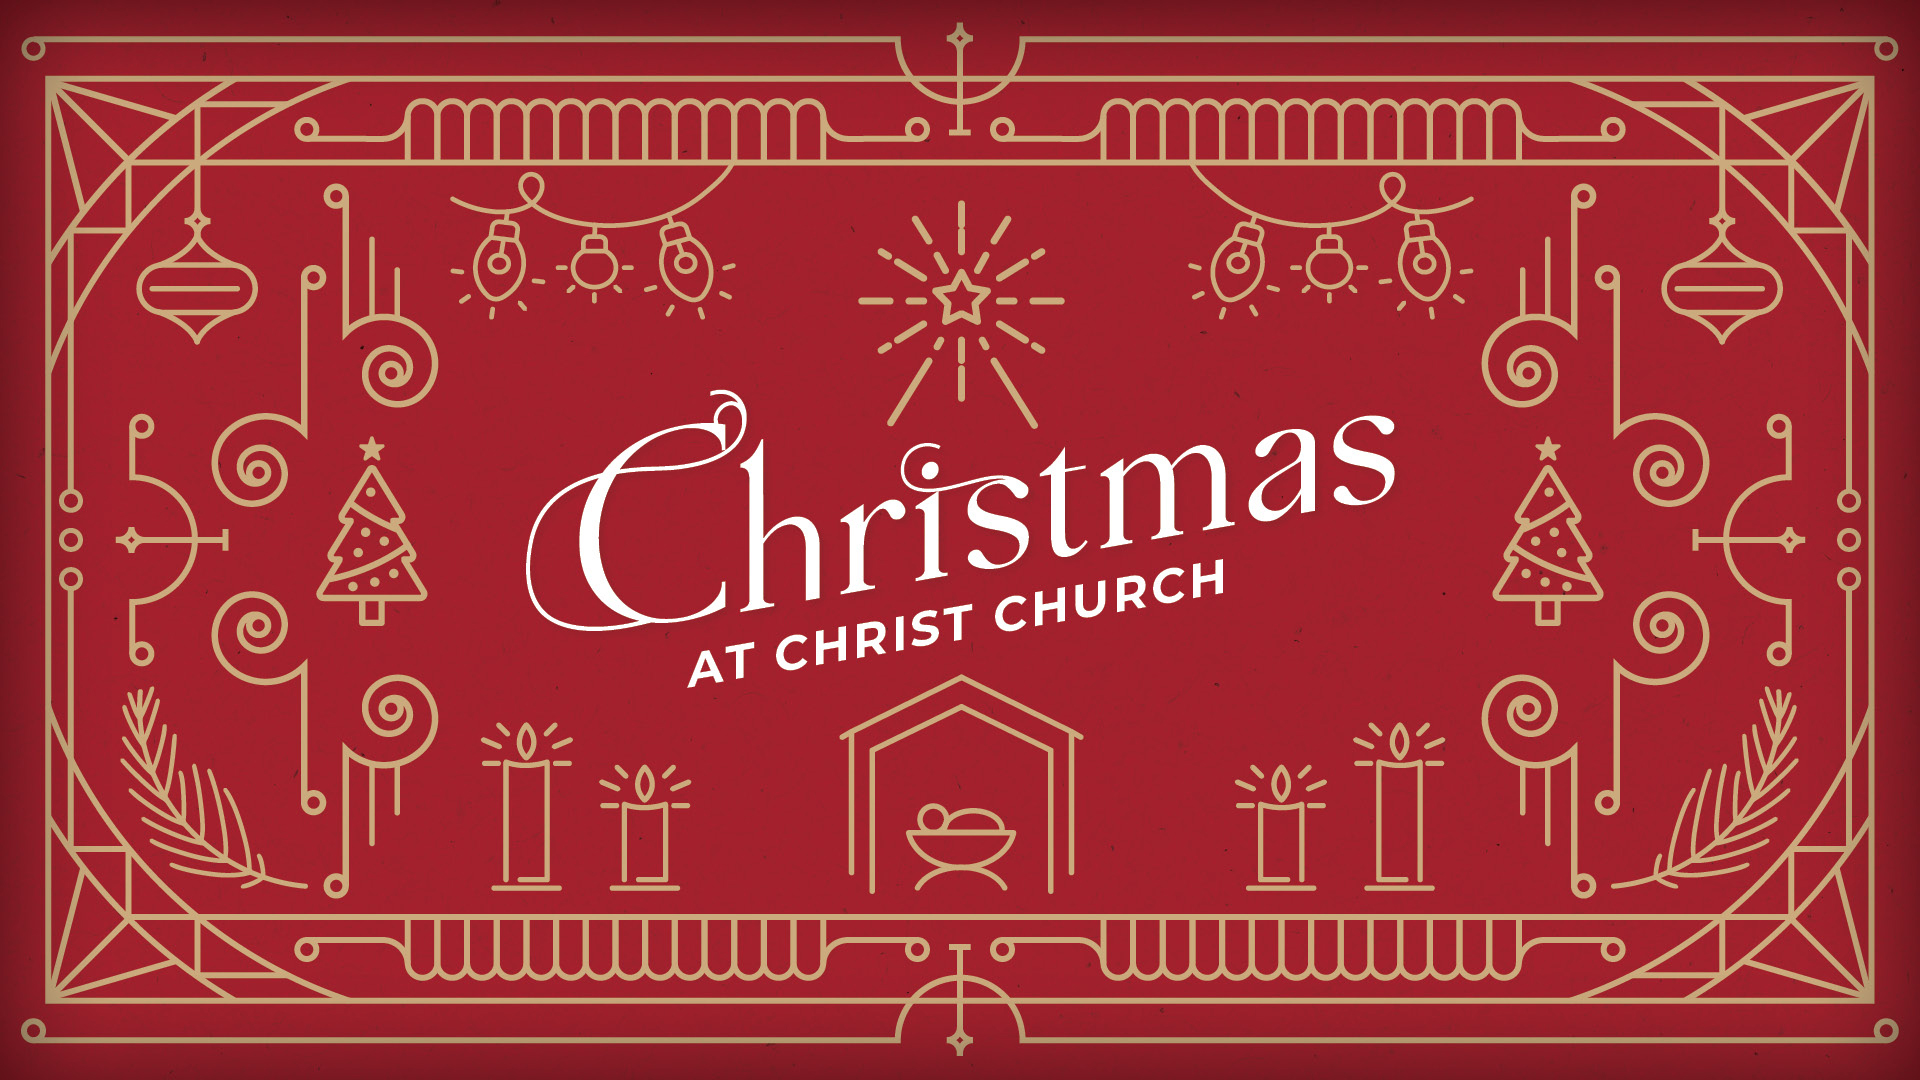 Christmas Worship Services
Friday, December 23 | Oak Brook
Saturday, December 24 | Oak Brook & Butterfield
 
